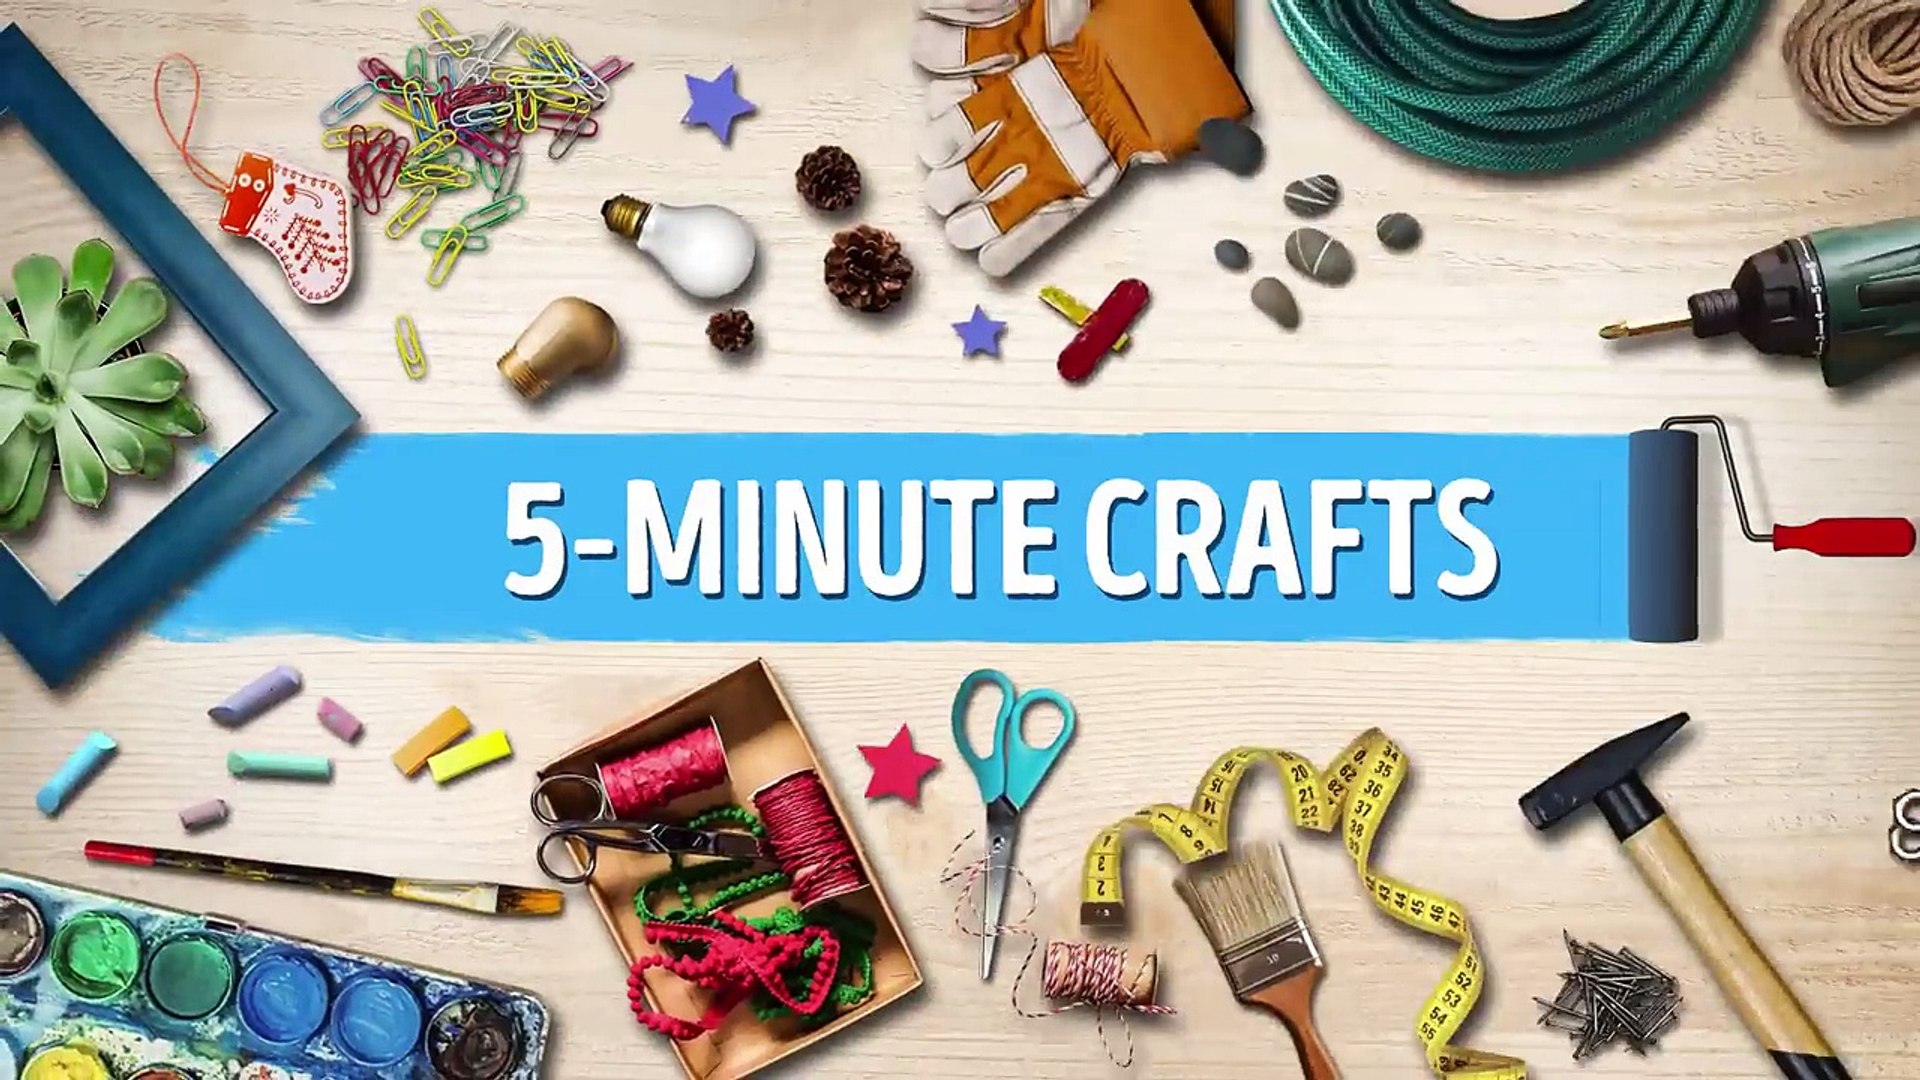 5 Minute Crafts Videos For Kids Barbie Image | Bigozine Arts